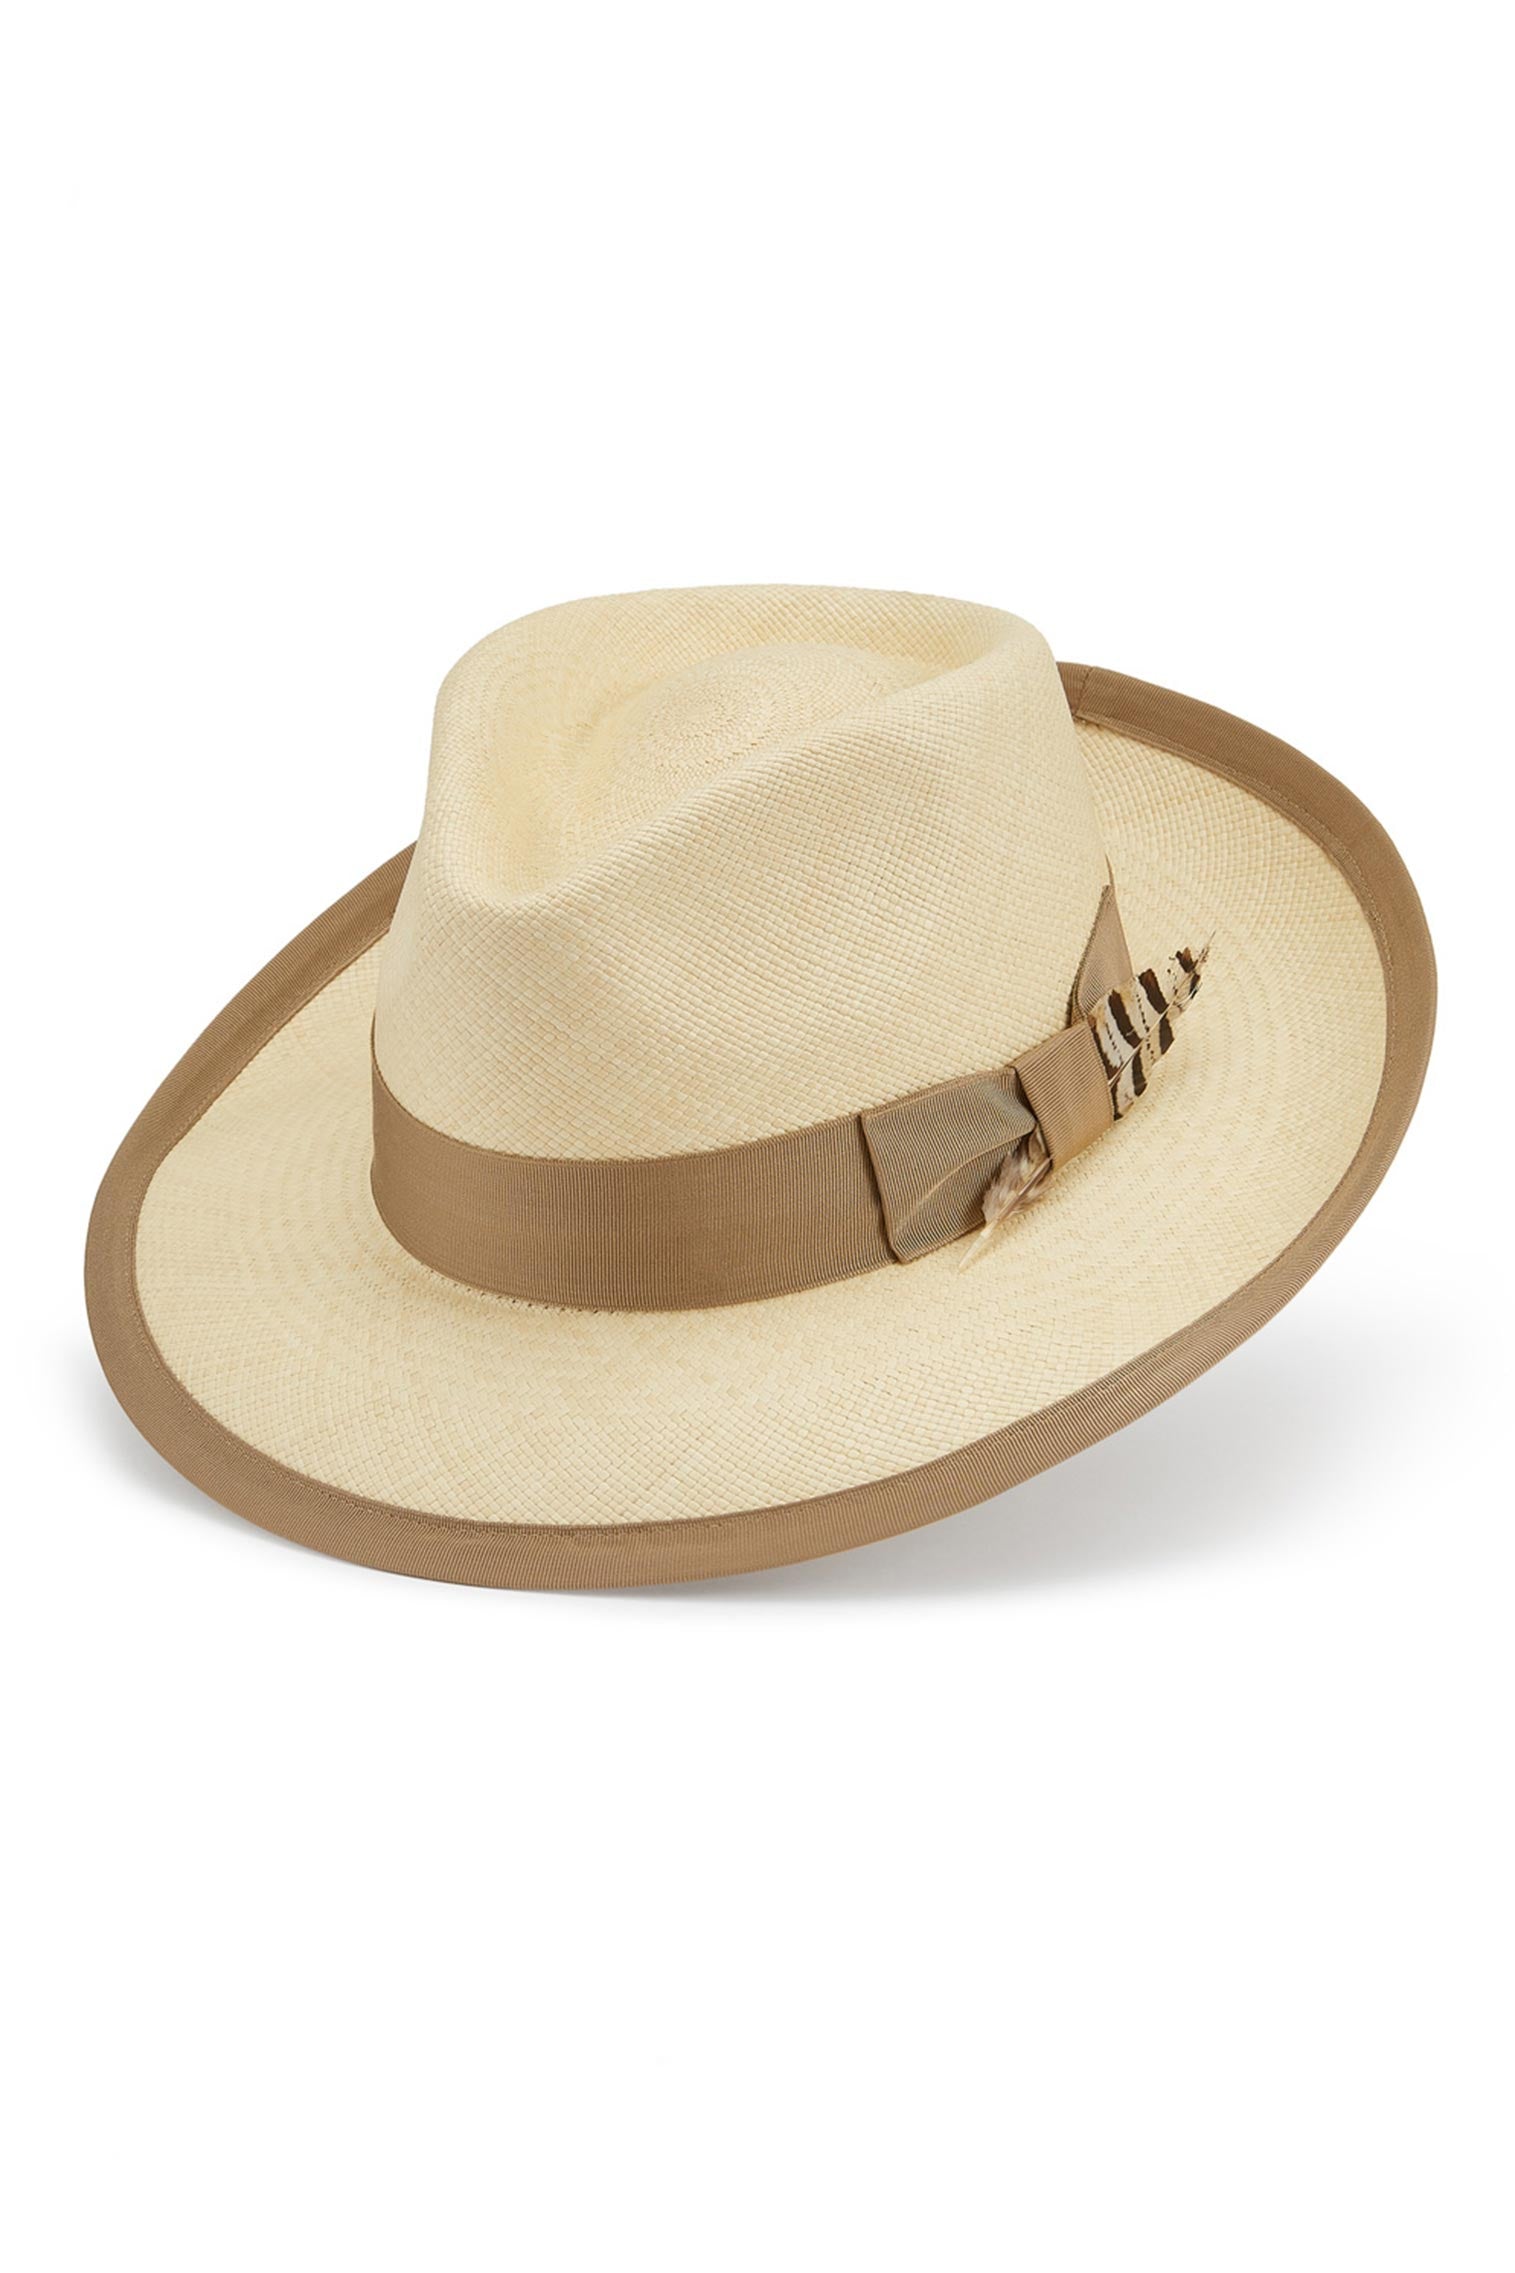 San Diego Panama - Panama Hats - Lock & Co. Hatters London UK